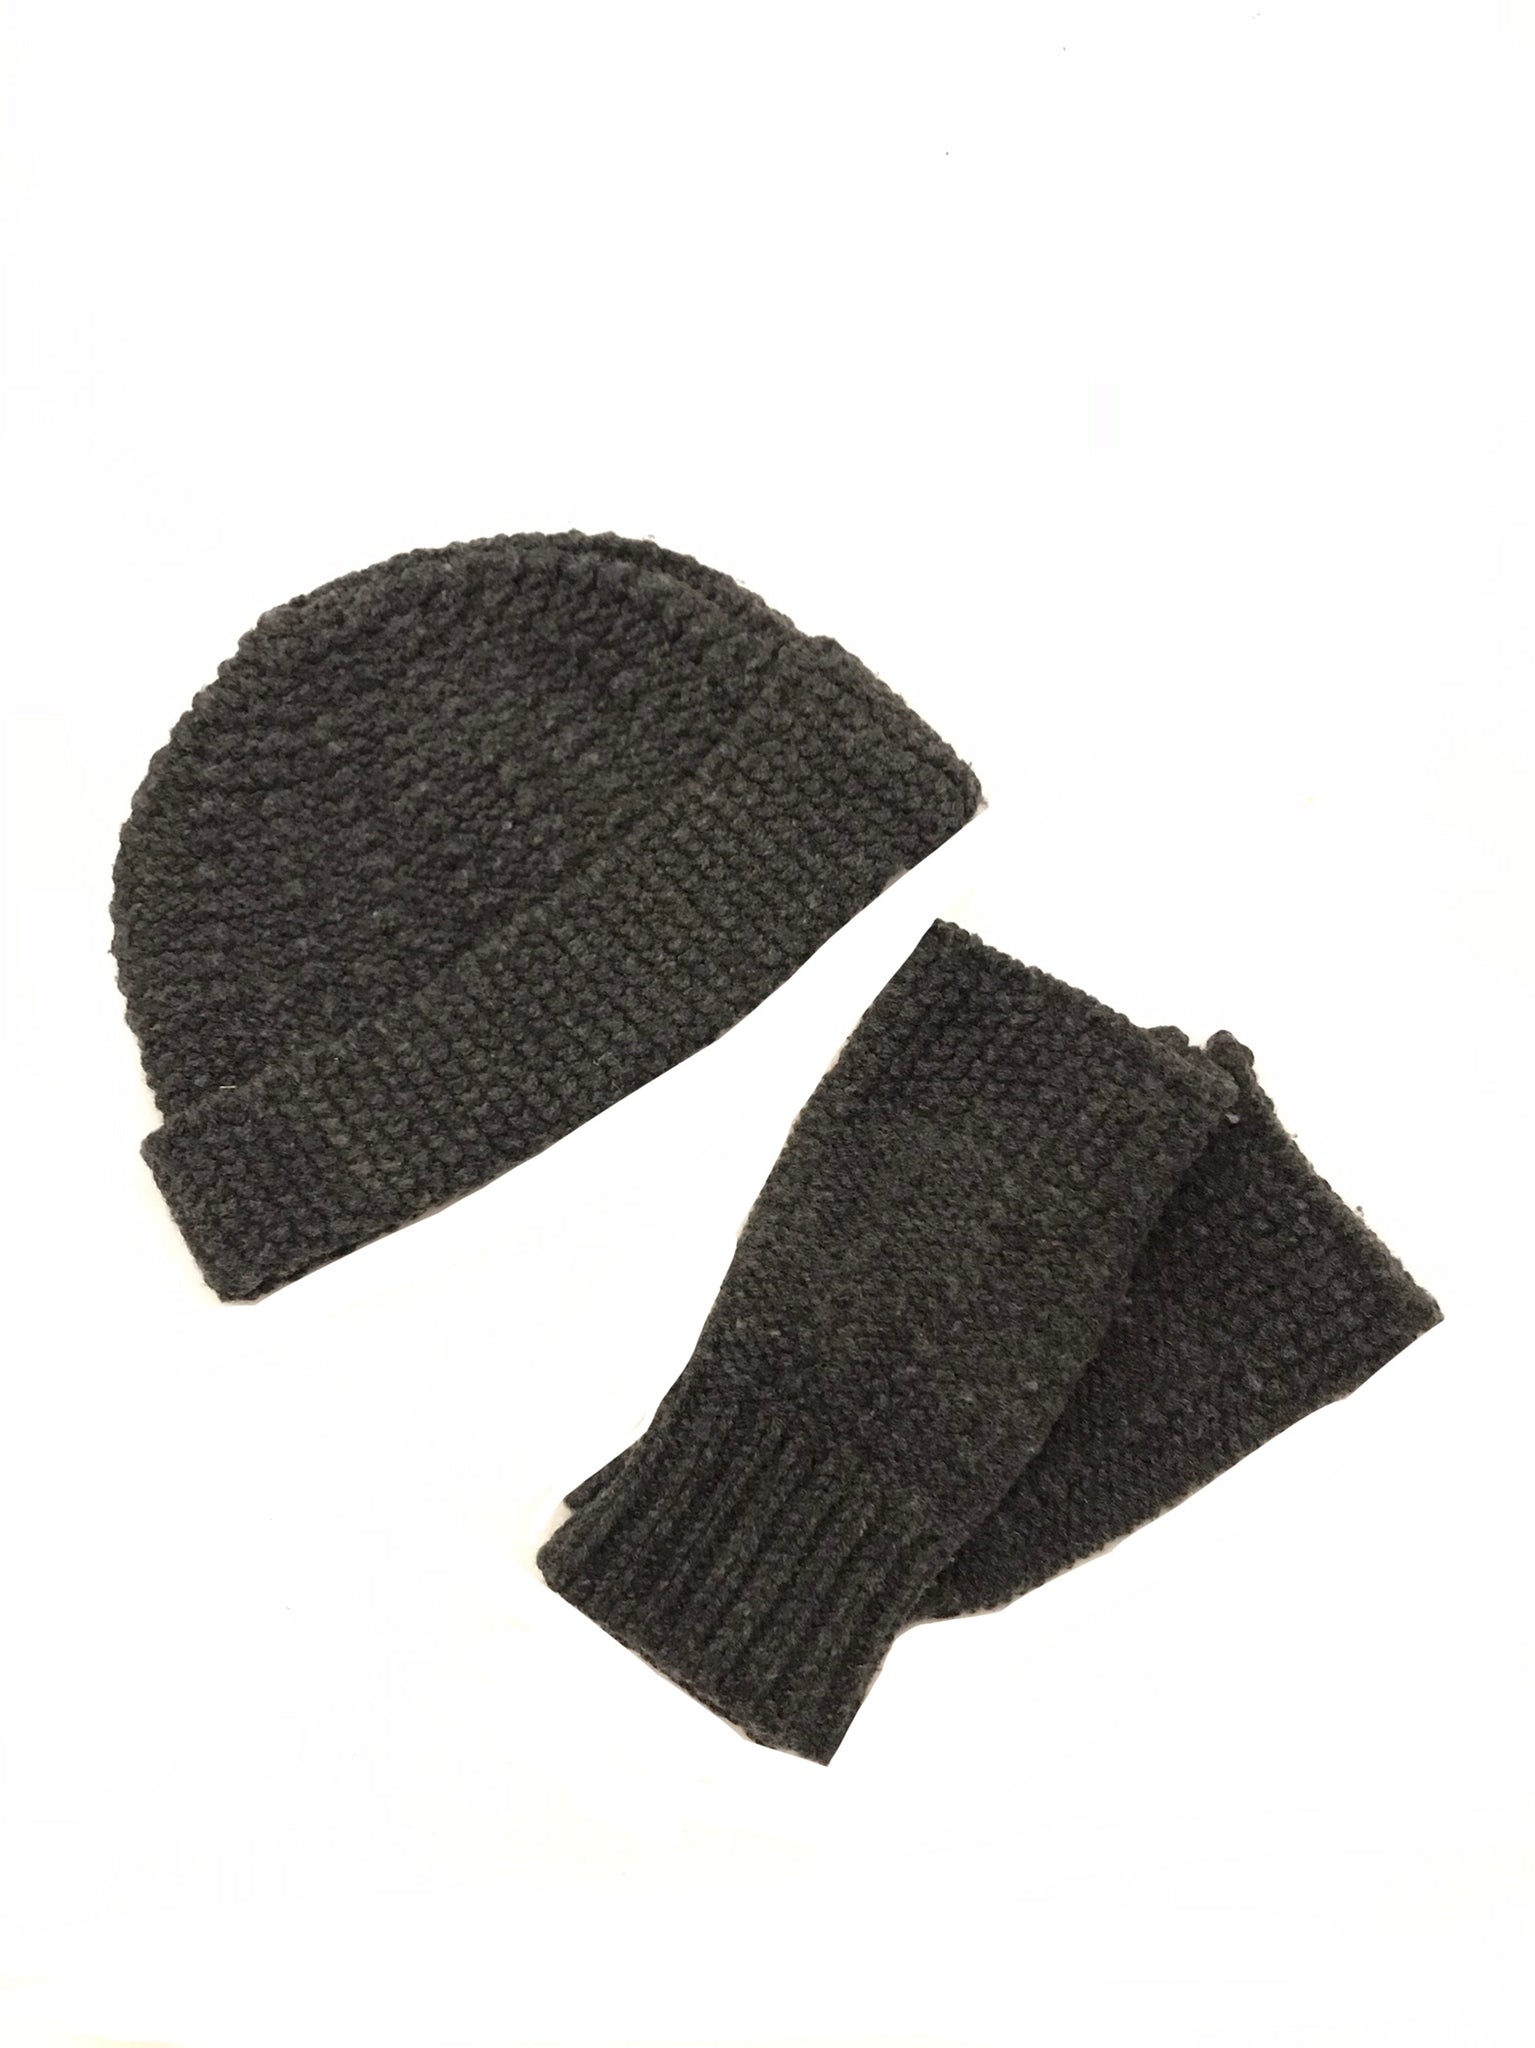 Isabella's Wardrobe Chloe Wool Hat and Gloves Set.